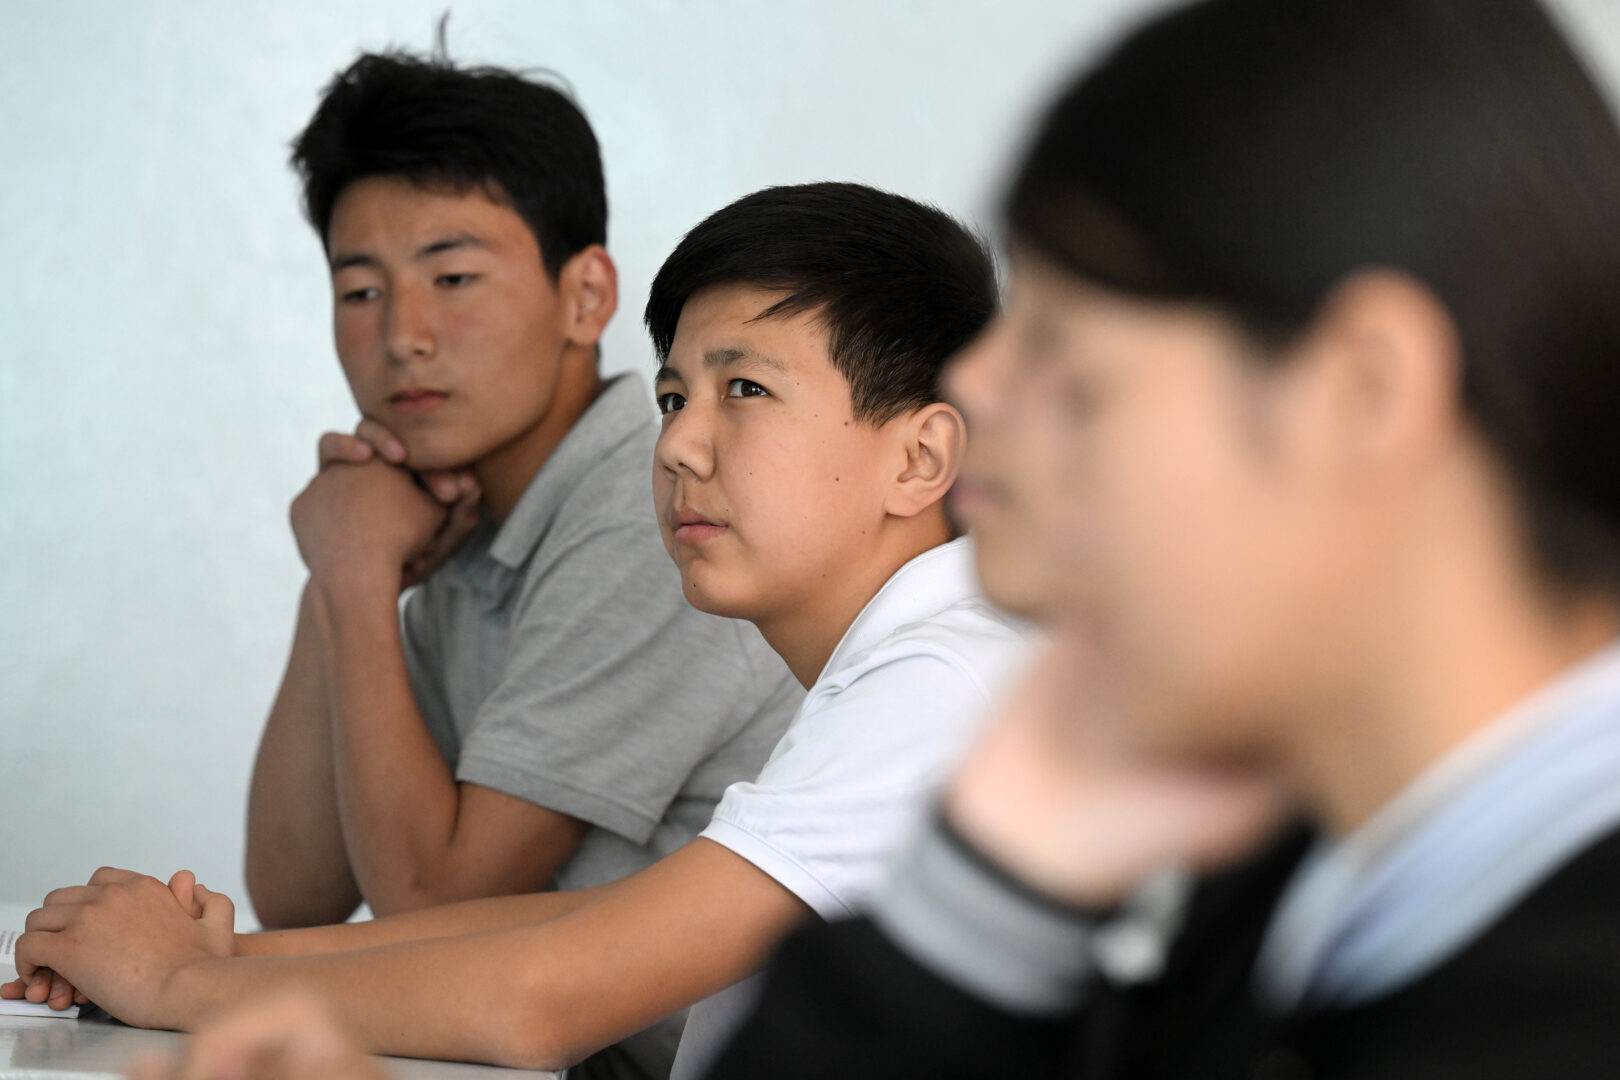 DOS 3969 Президент внепланово посетил одну из школ Бишкека и посидел на уроке - фото